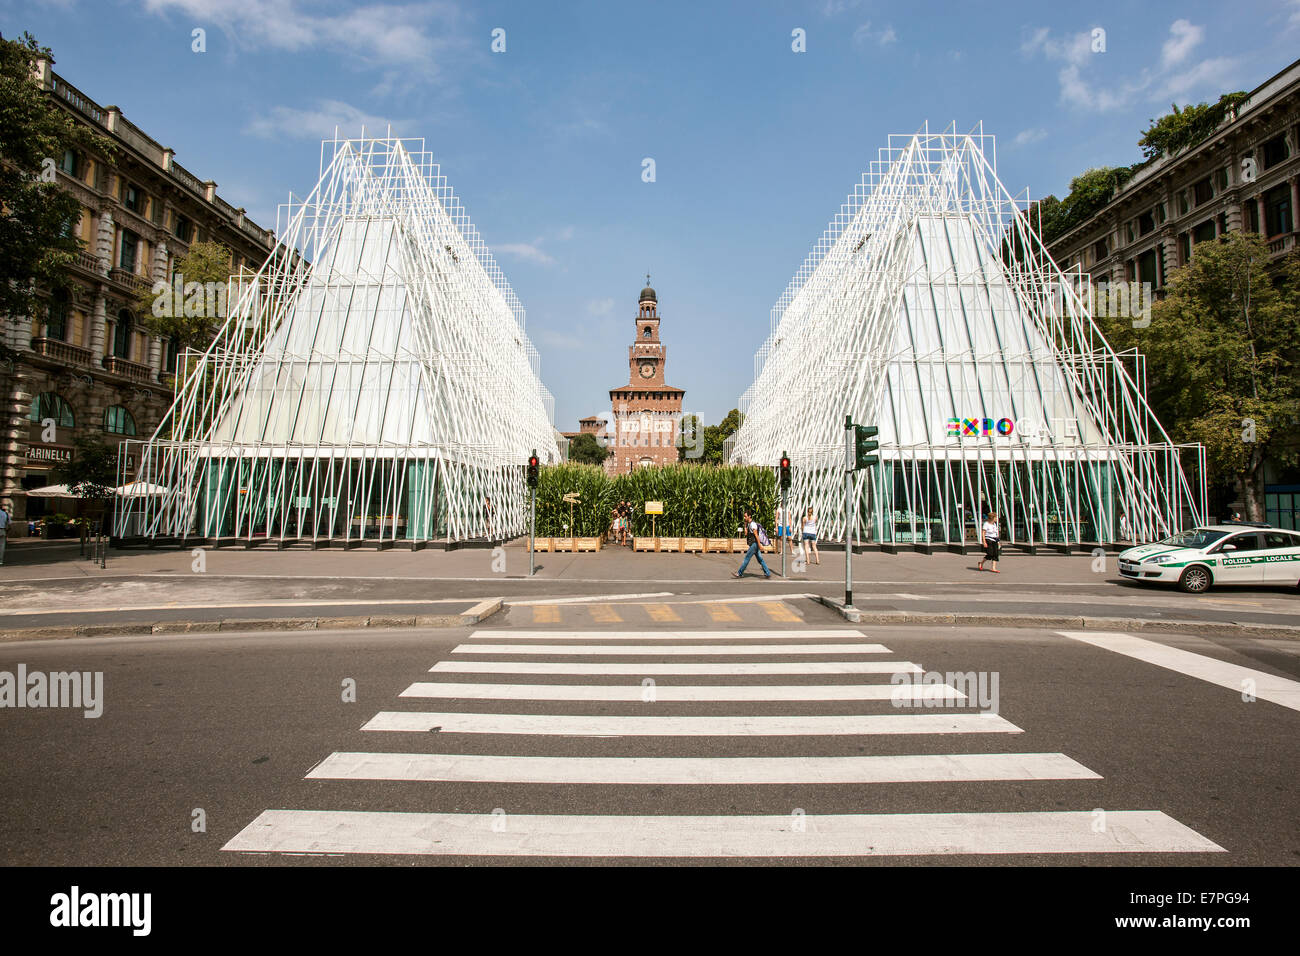 Milán, la Expo 2015, EXPOGATE, feria, Exposición Universal, el castillo Sforzesco, GATE, Infopoint, cruce peatonal, Lombardía, Italia Foto de stock